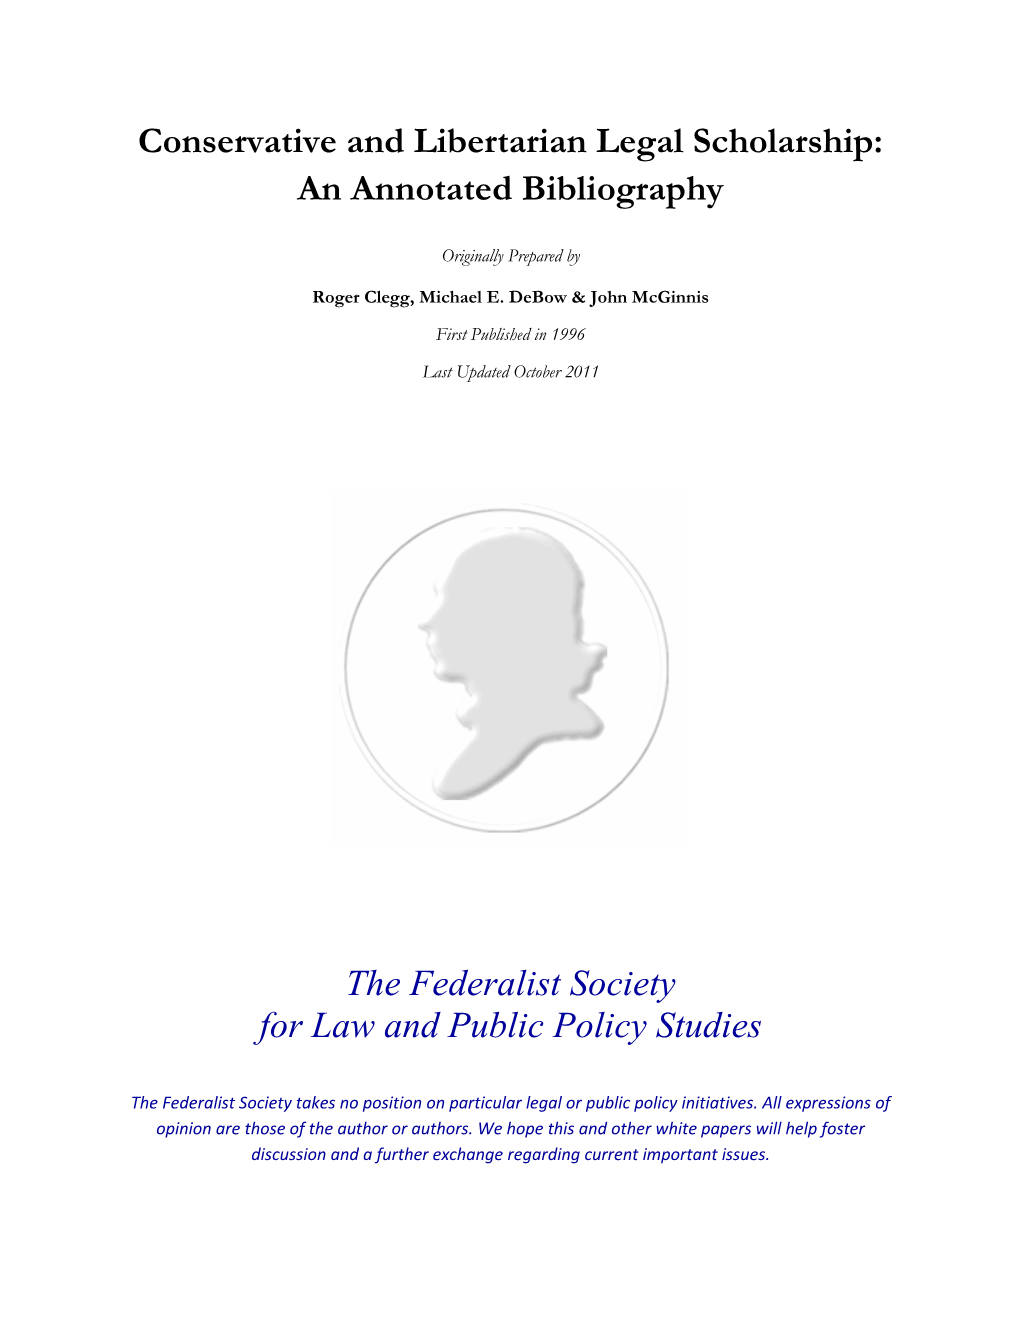 Conservative and Libertarian Legal Scholarship: an Annotated Bibliography